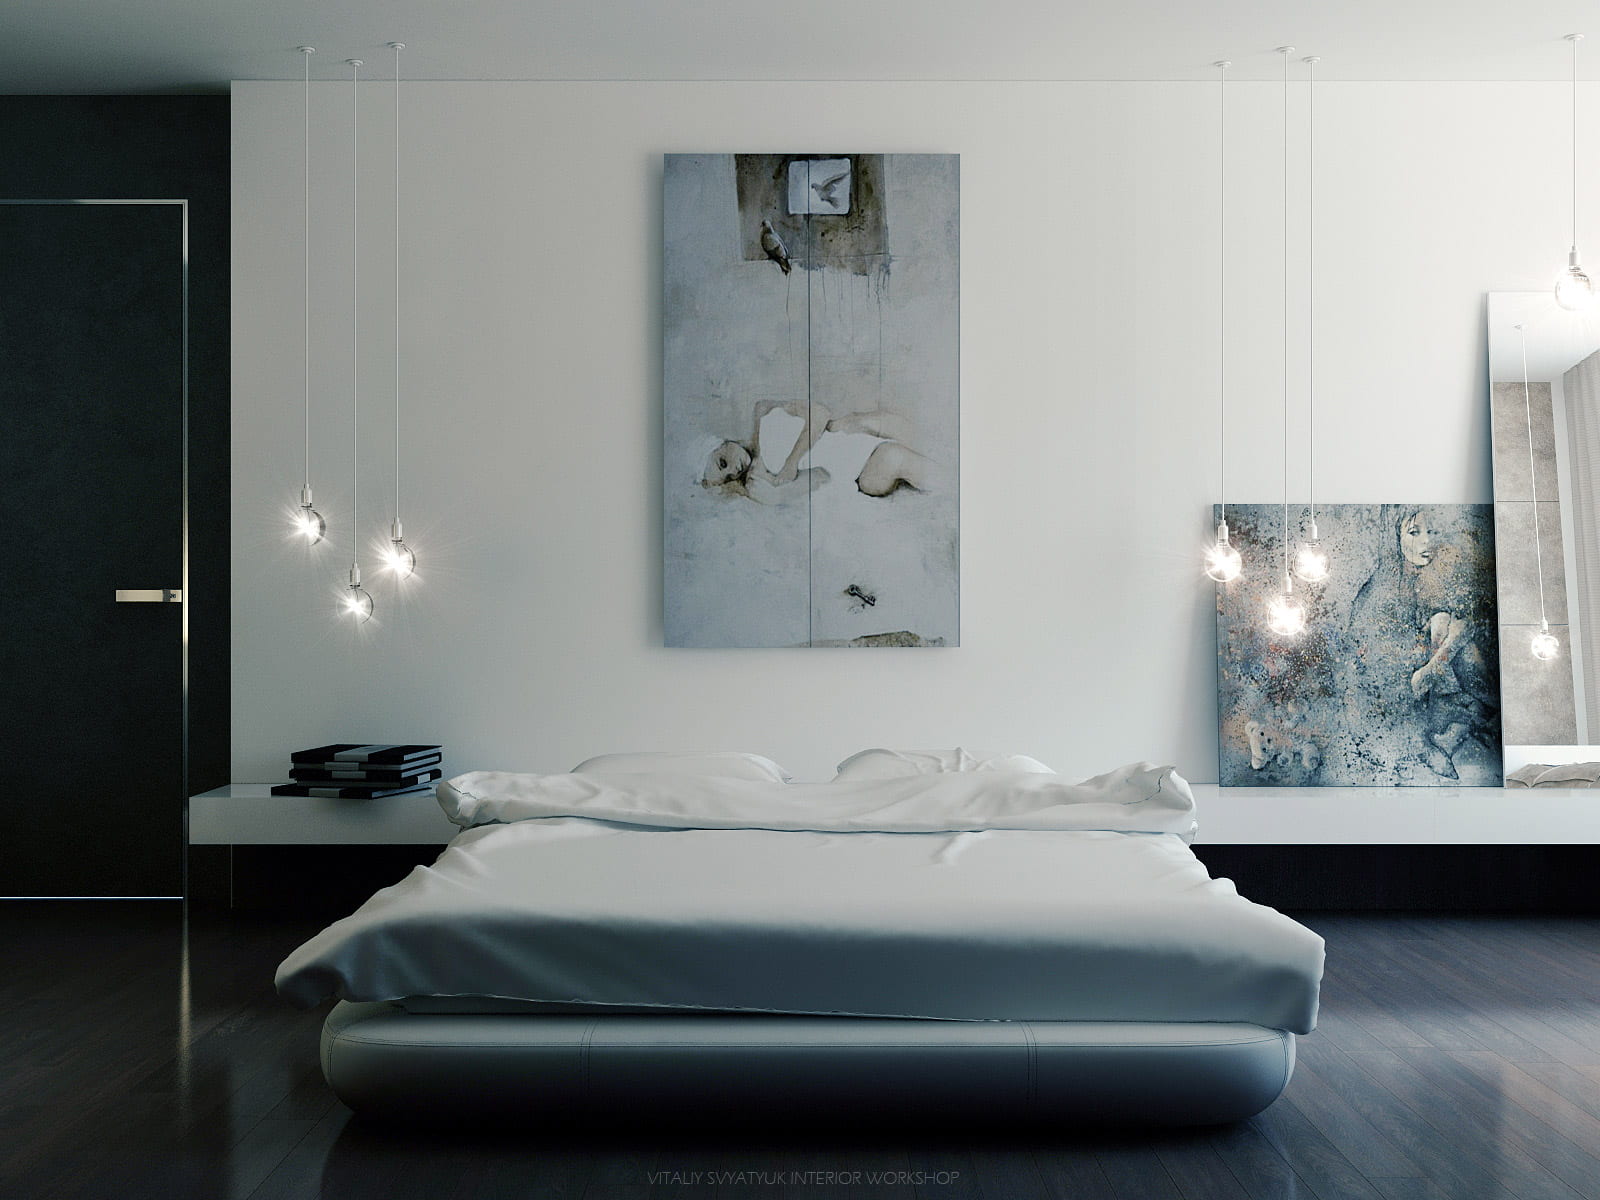 Bedroom Decor Ideas